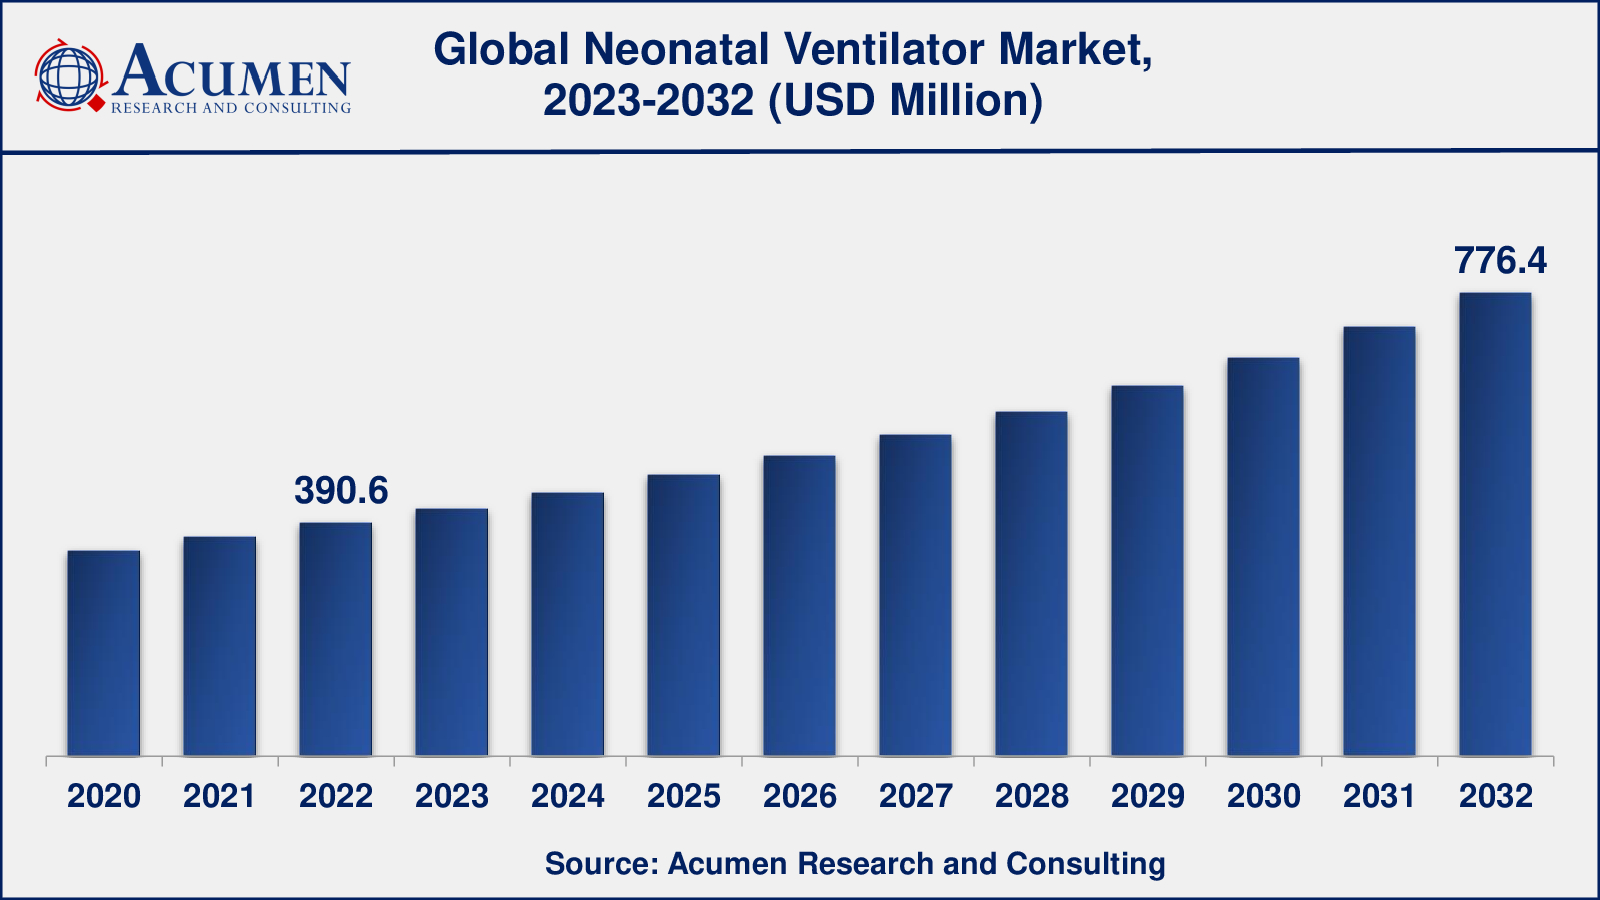 Neonatal Ventilator Market Analysis Period